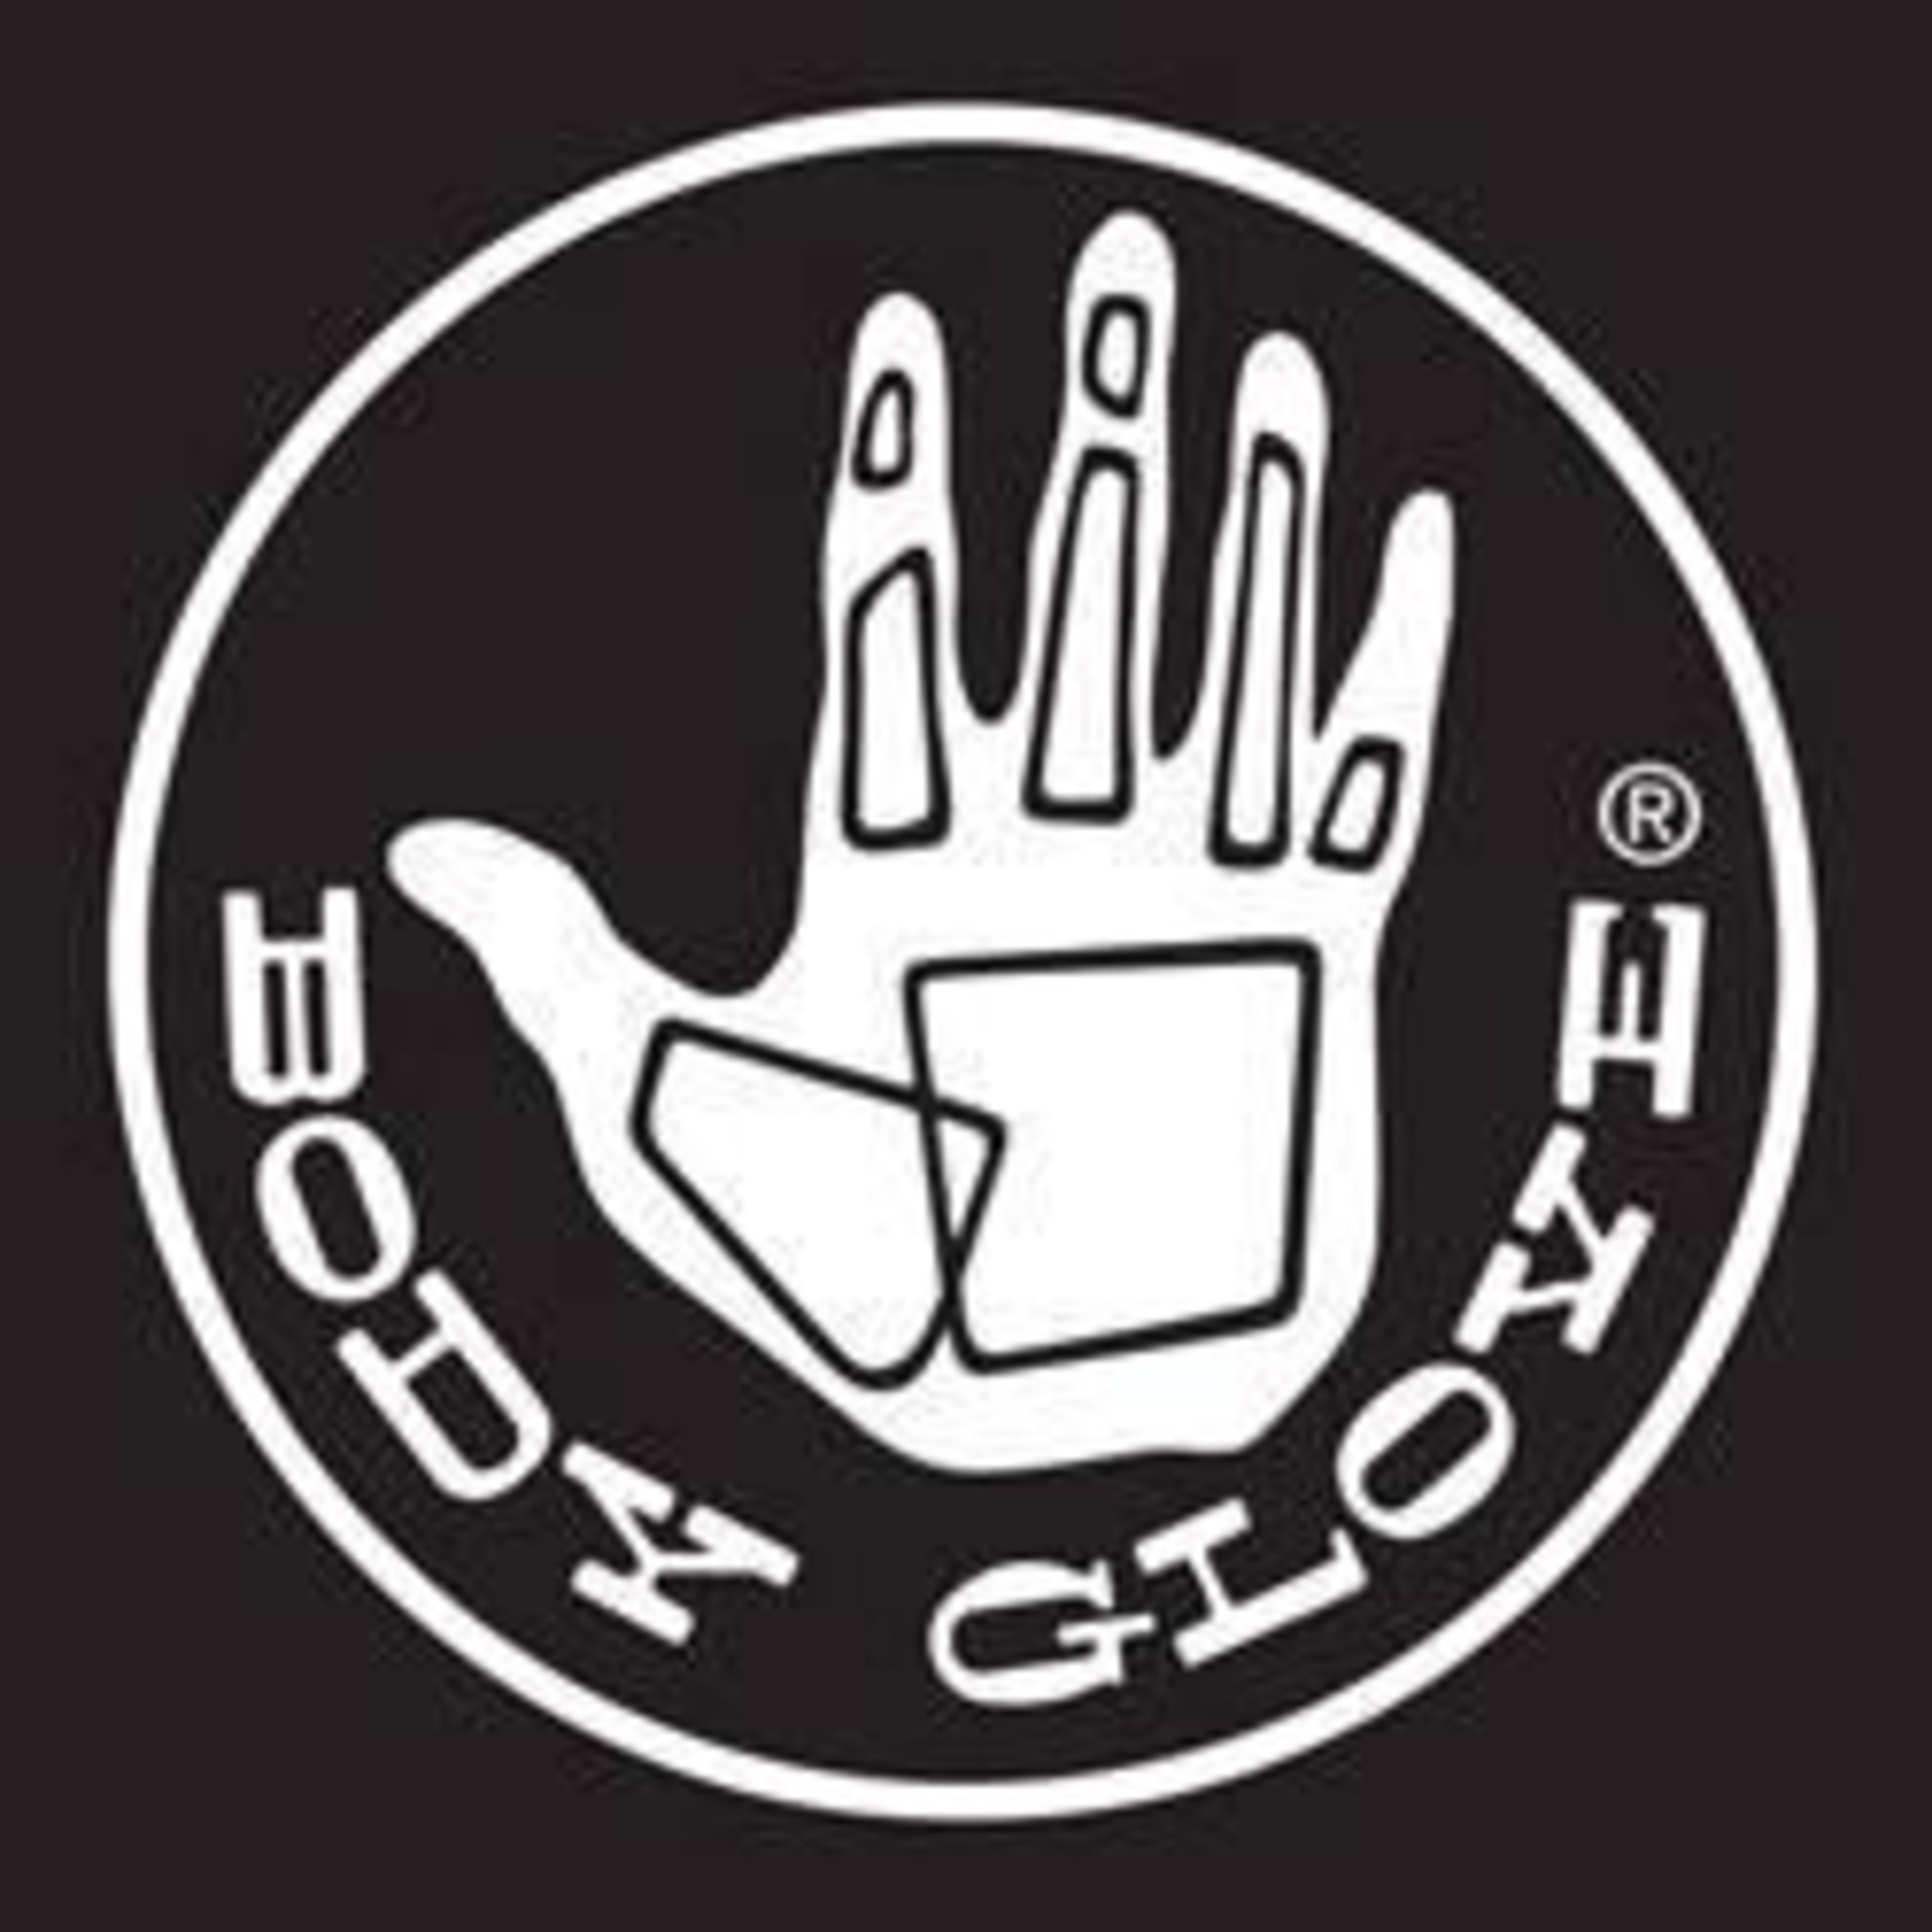 Body GloveCode